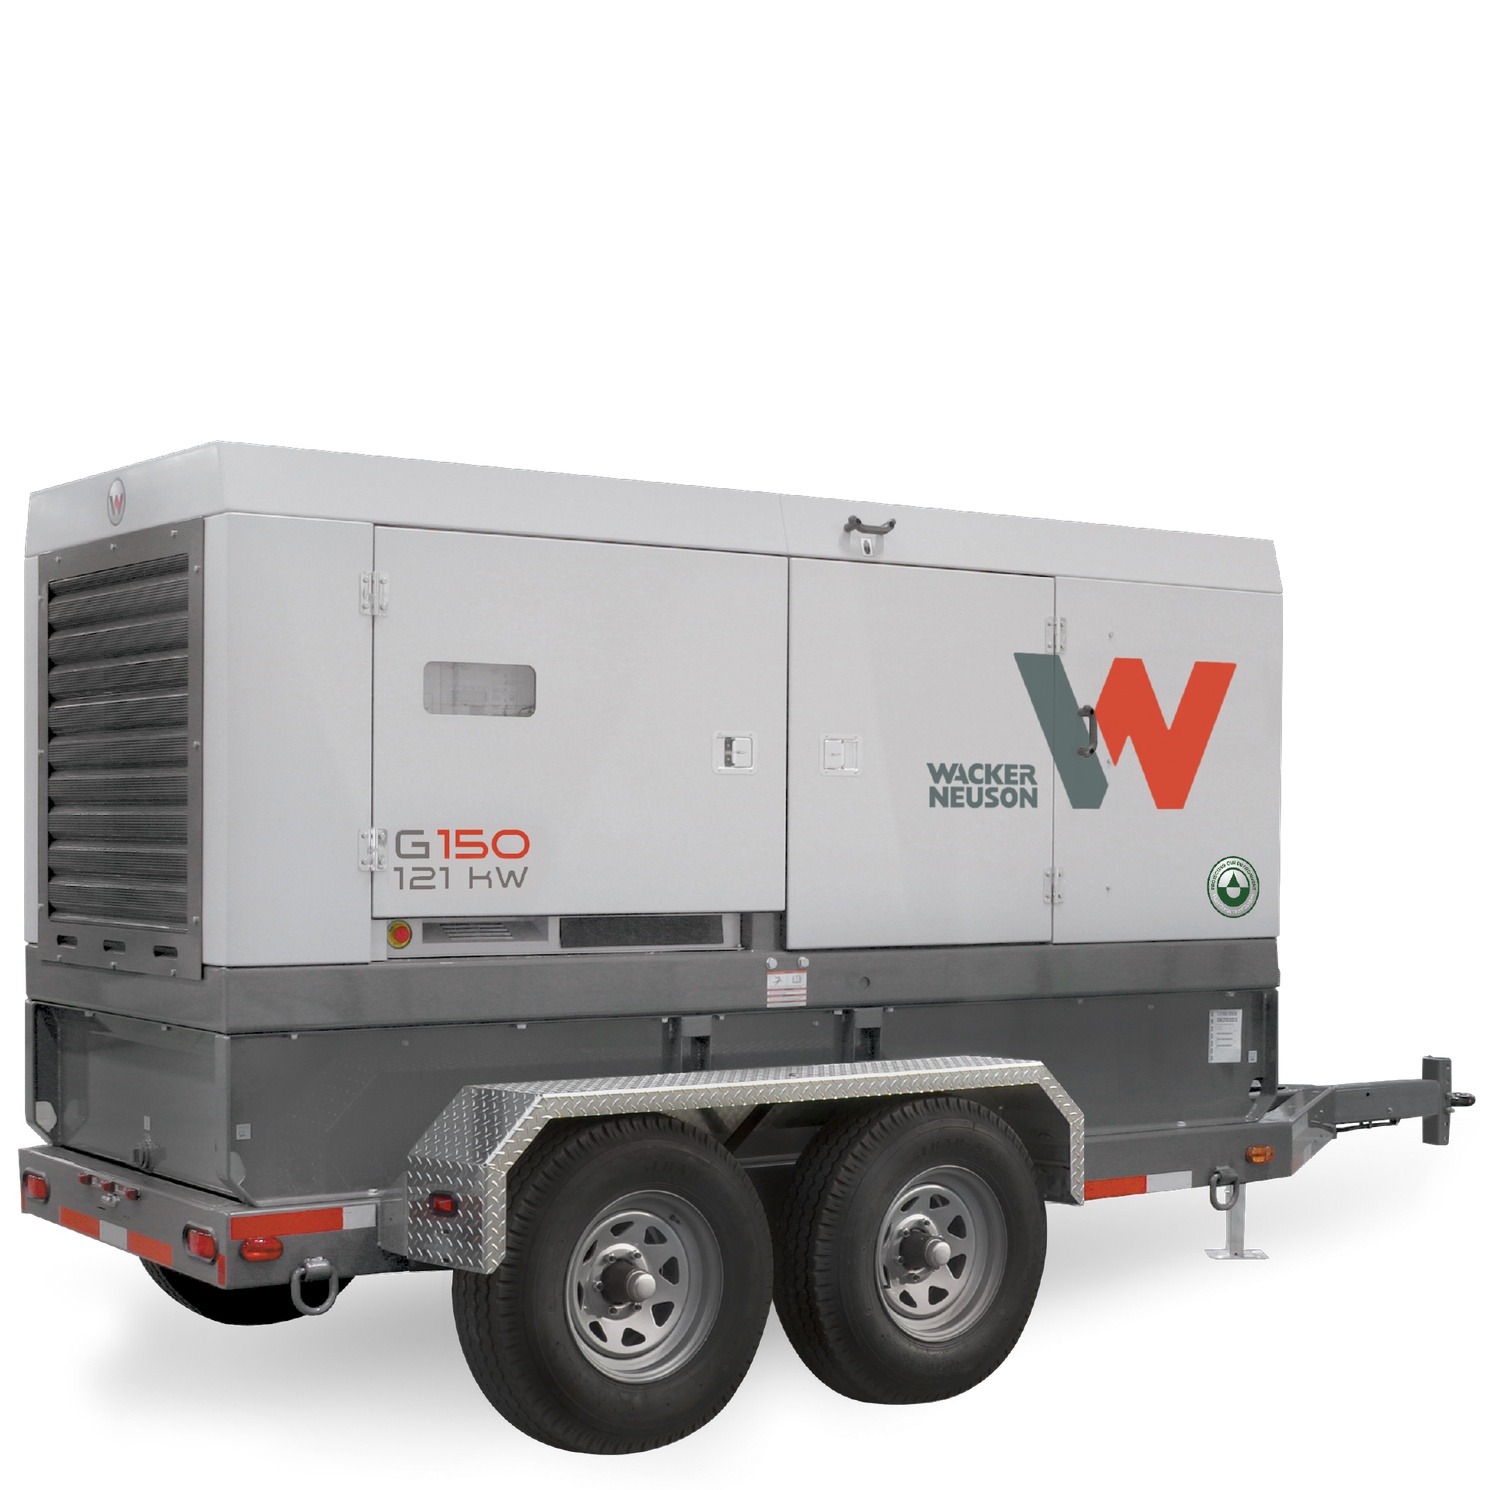  Wacker Neuson Mobile generators G150